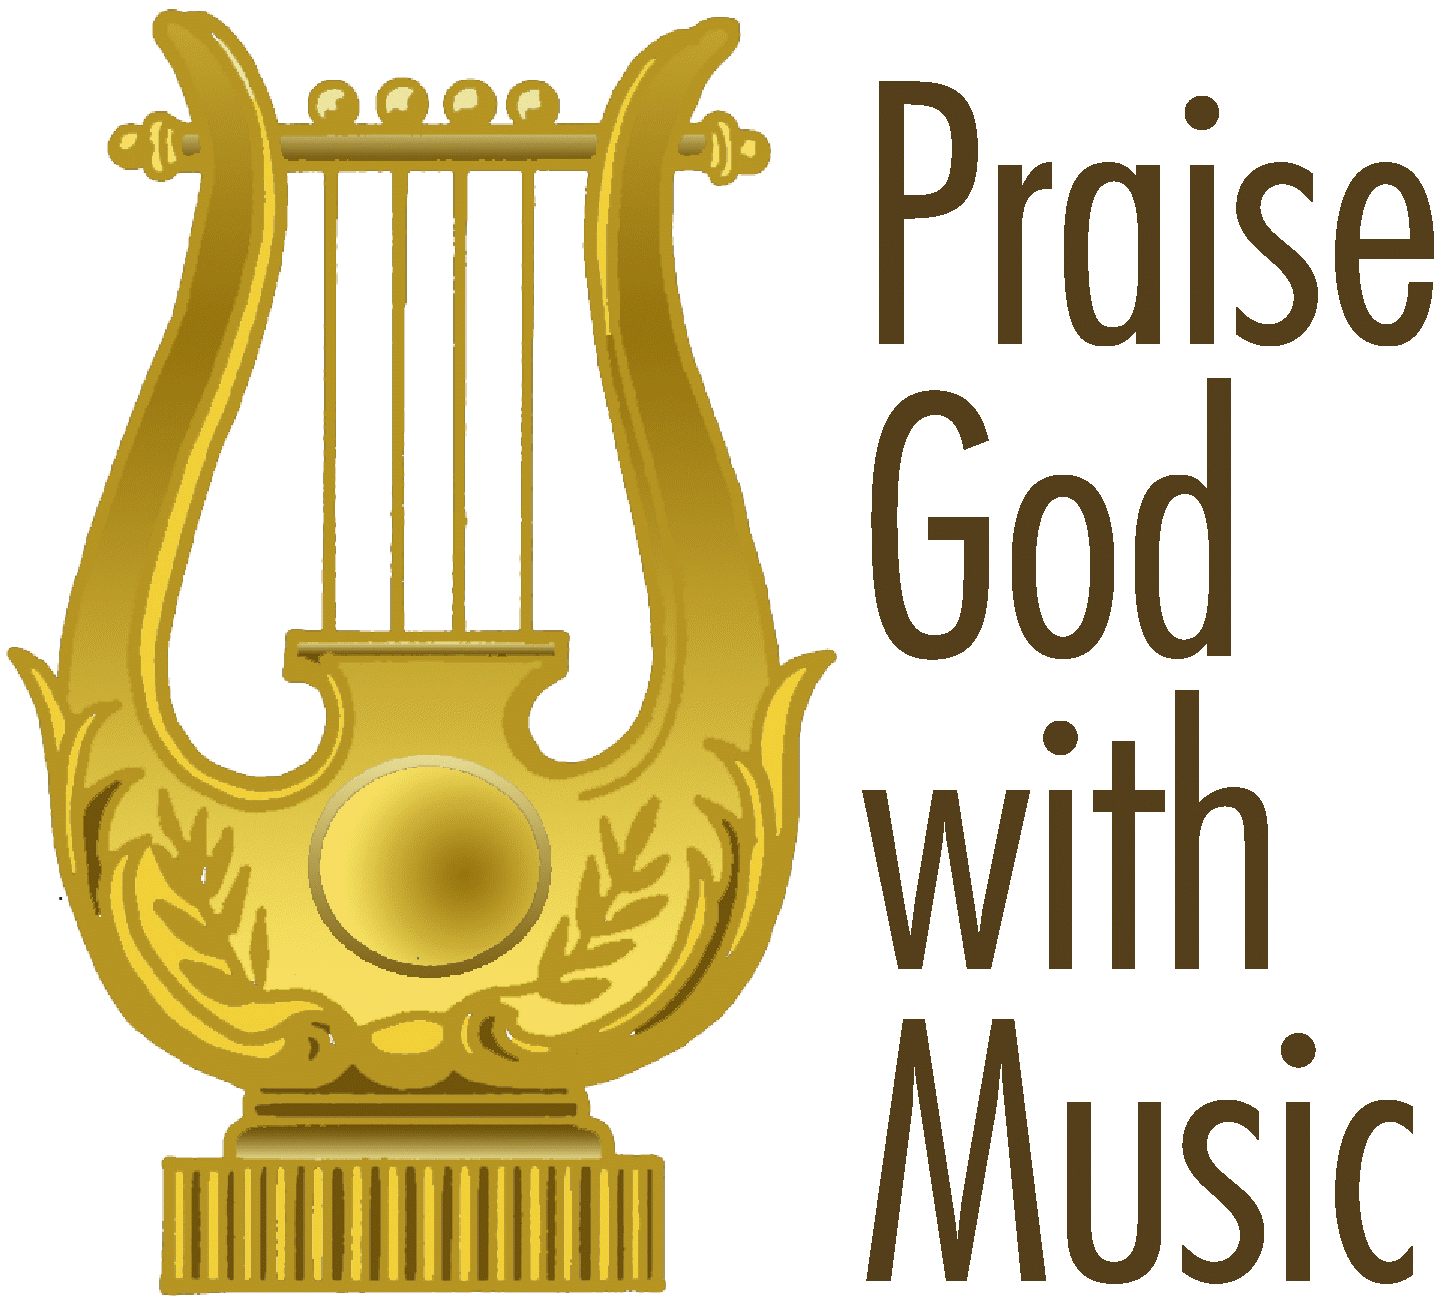 Top Praise God Music Library.